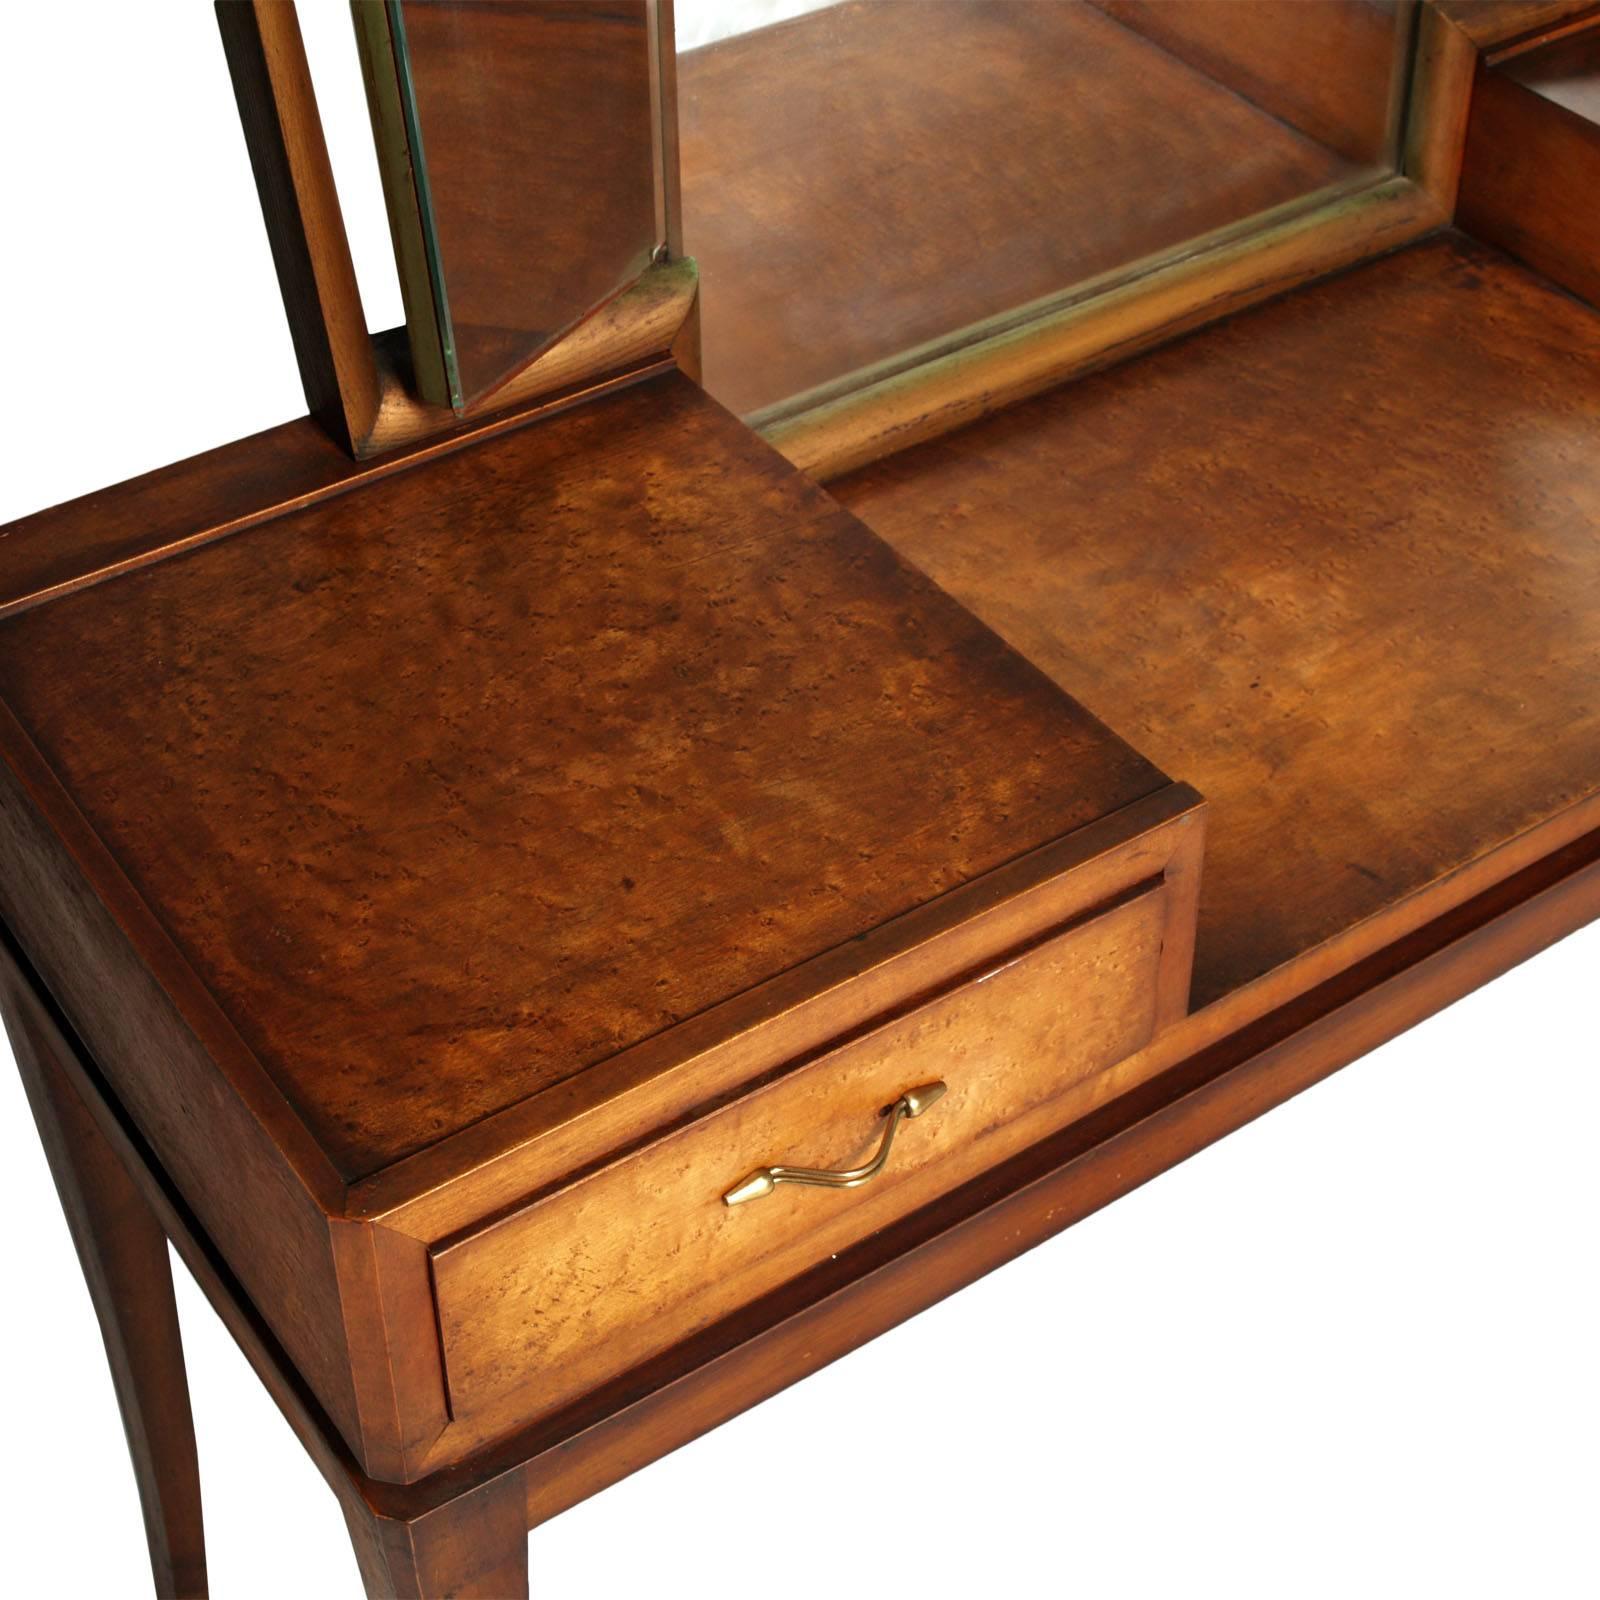 Appliqué Early 20th Century Modernist Vanity or Dressing Table, Meroni & Fossati Lissone